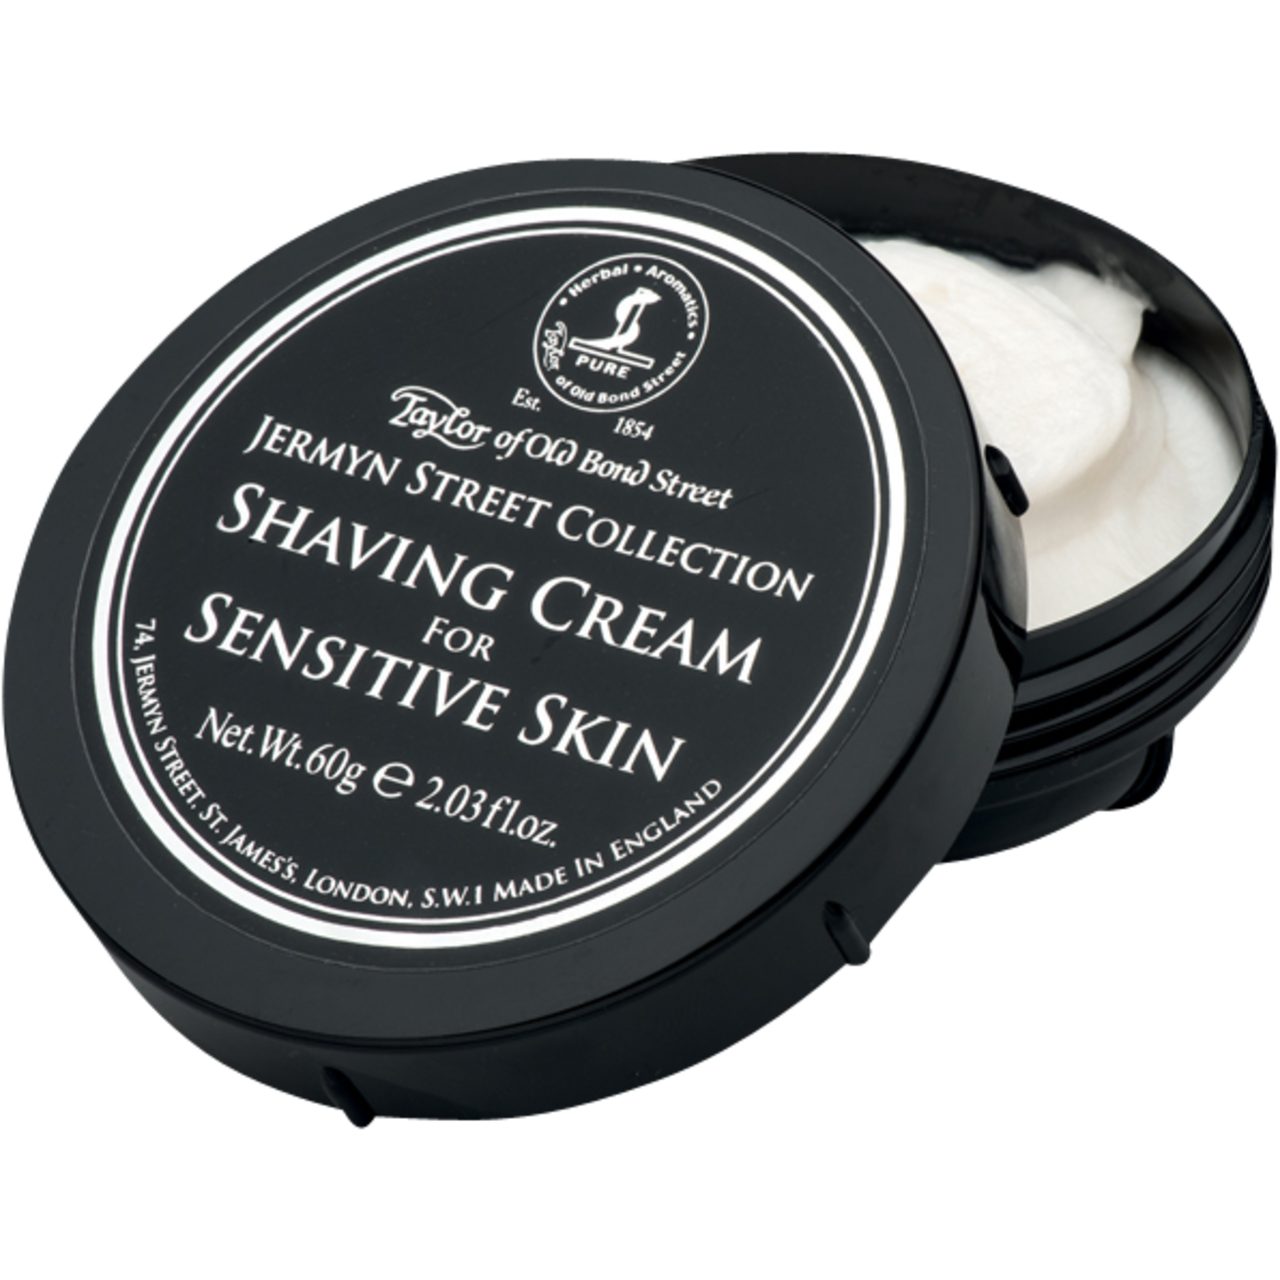 Street Taylor Bond Street Jermyn Collection Cream of Old Rasiercreme Skin sensitive Shaving for